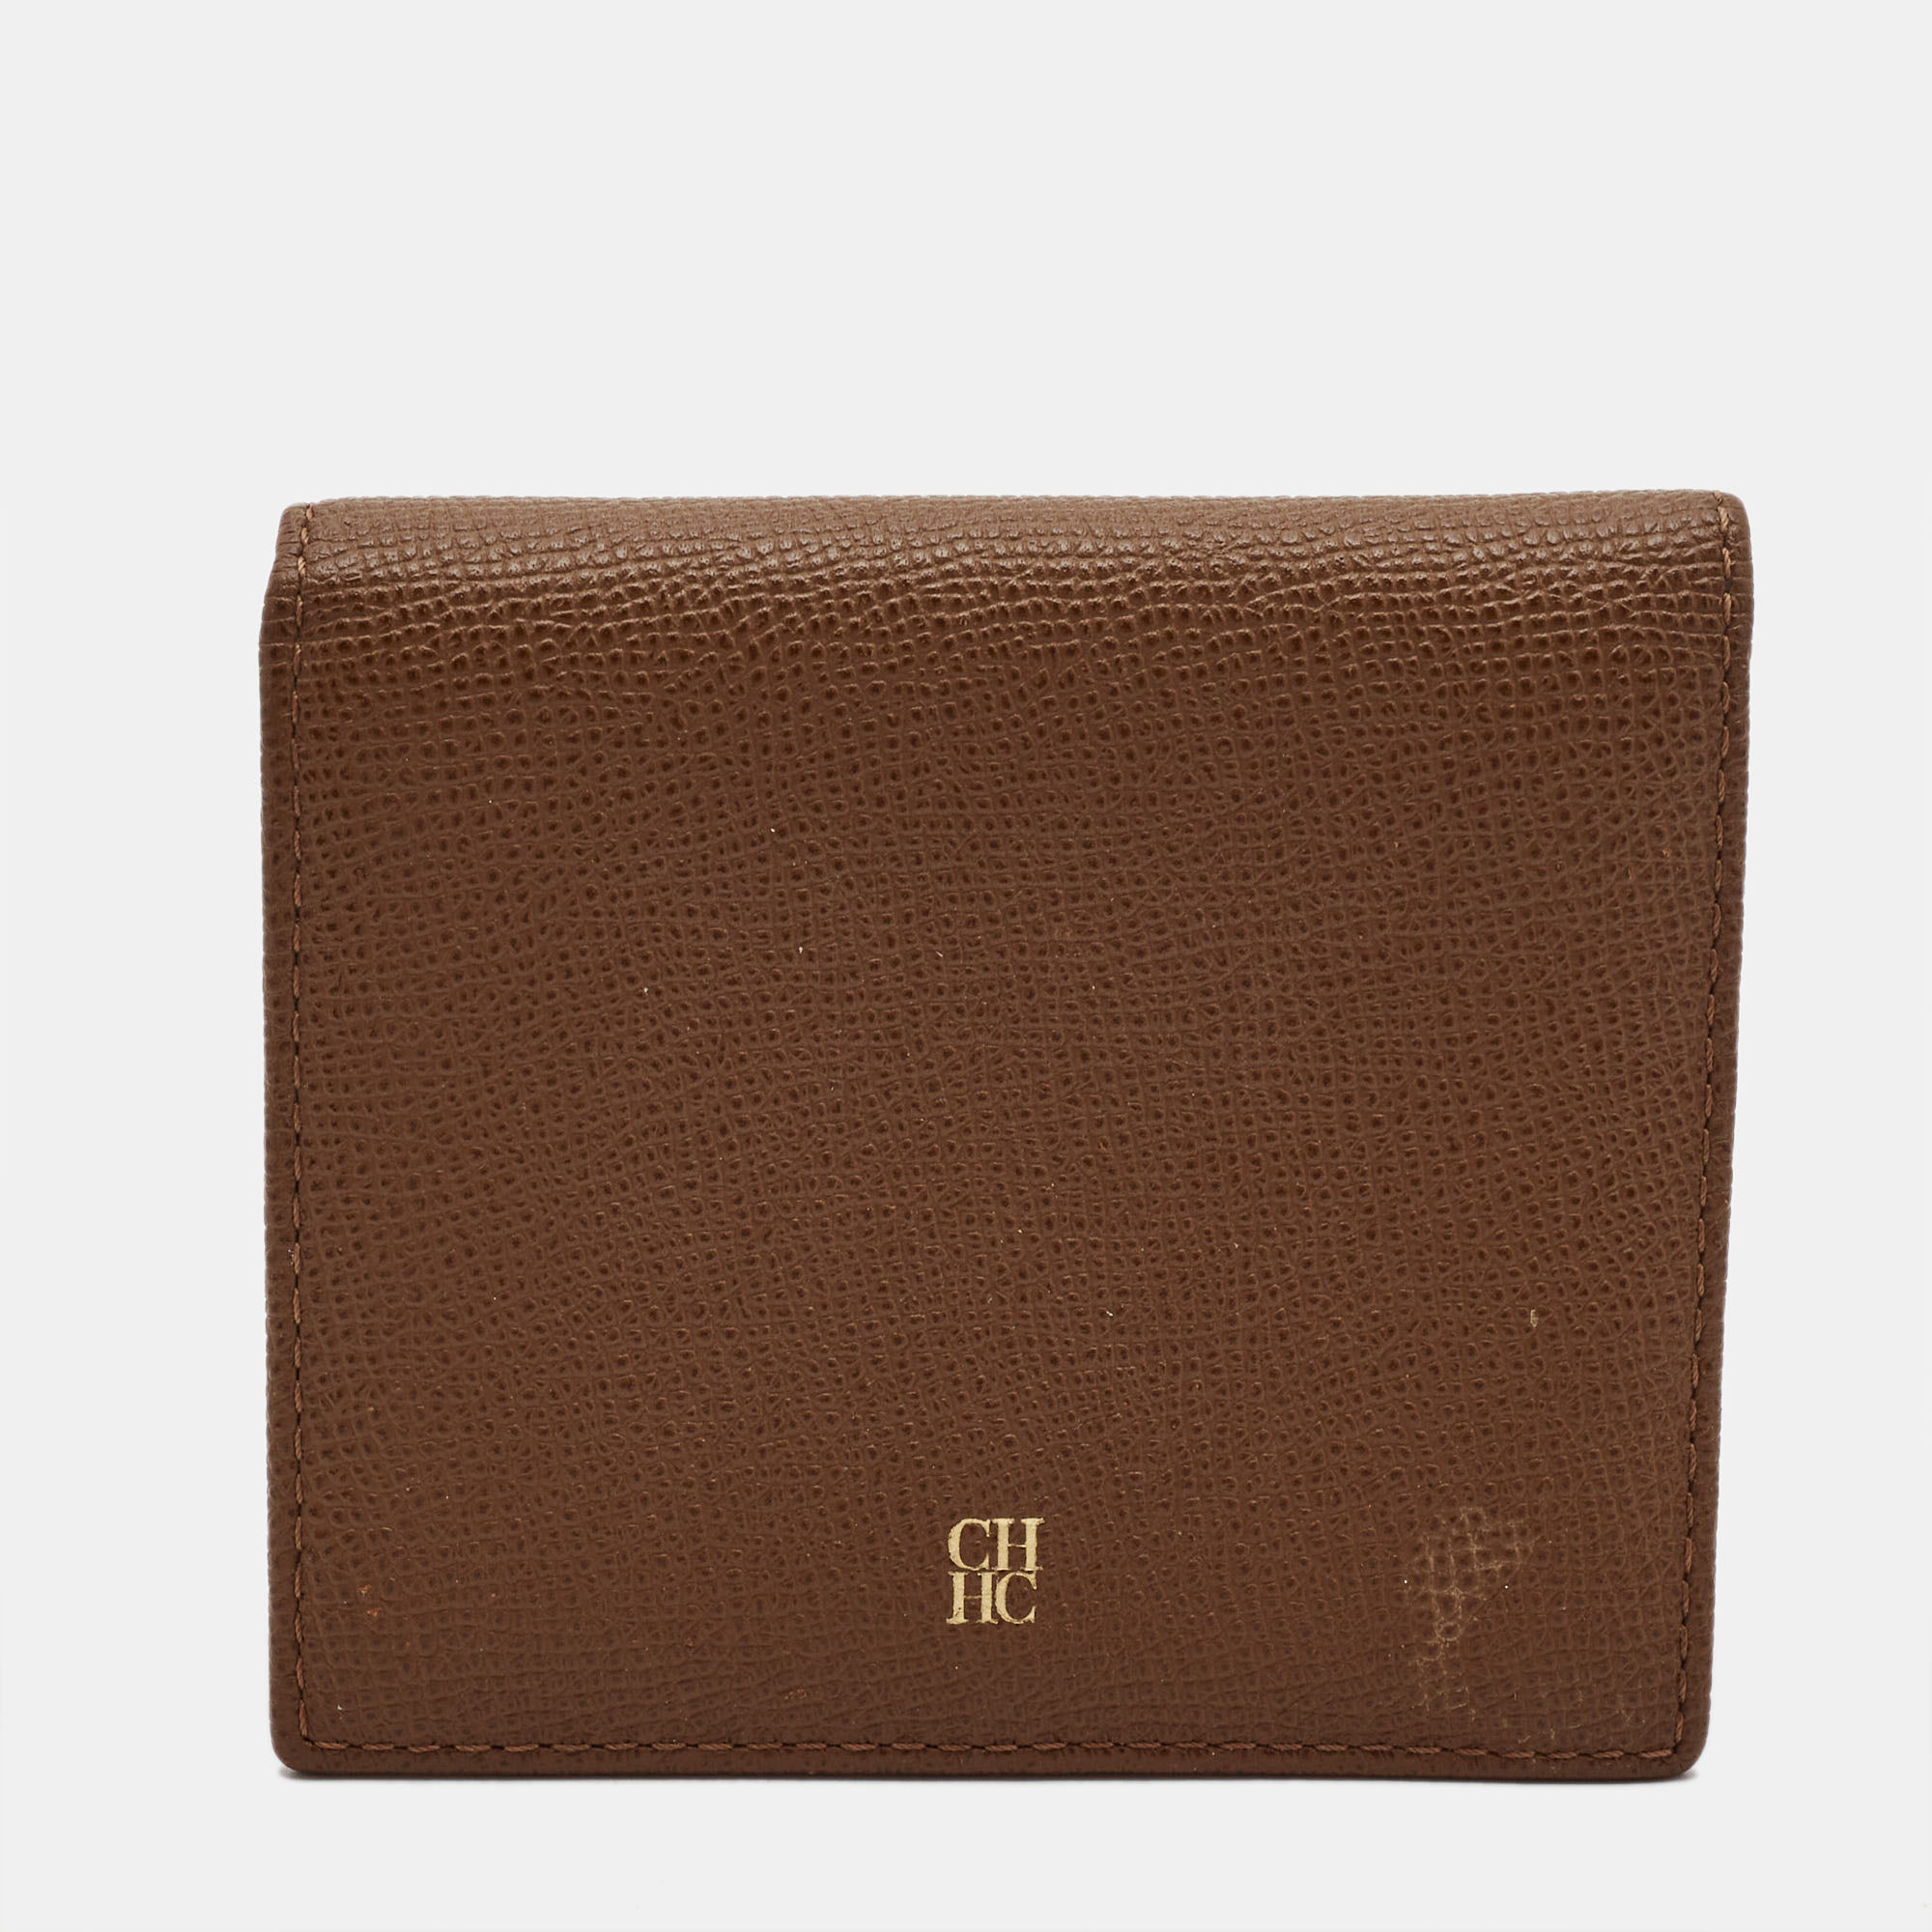 Carolina herrera brown leather chhc bifold wallet